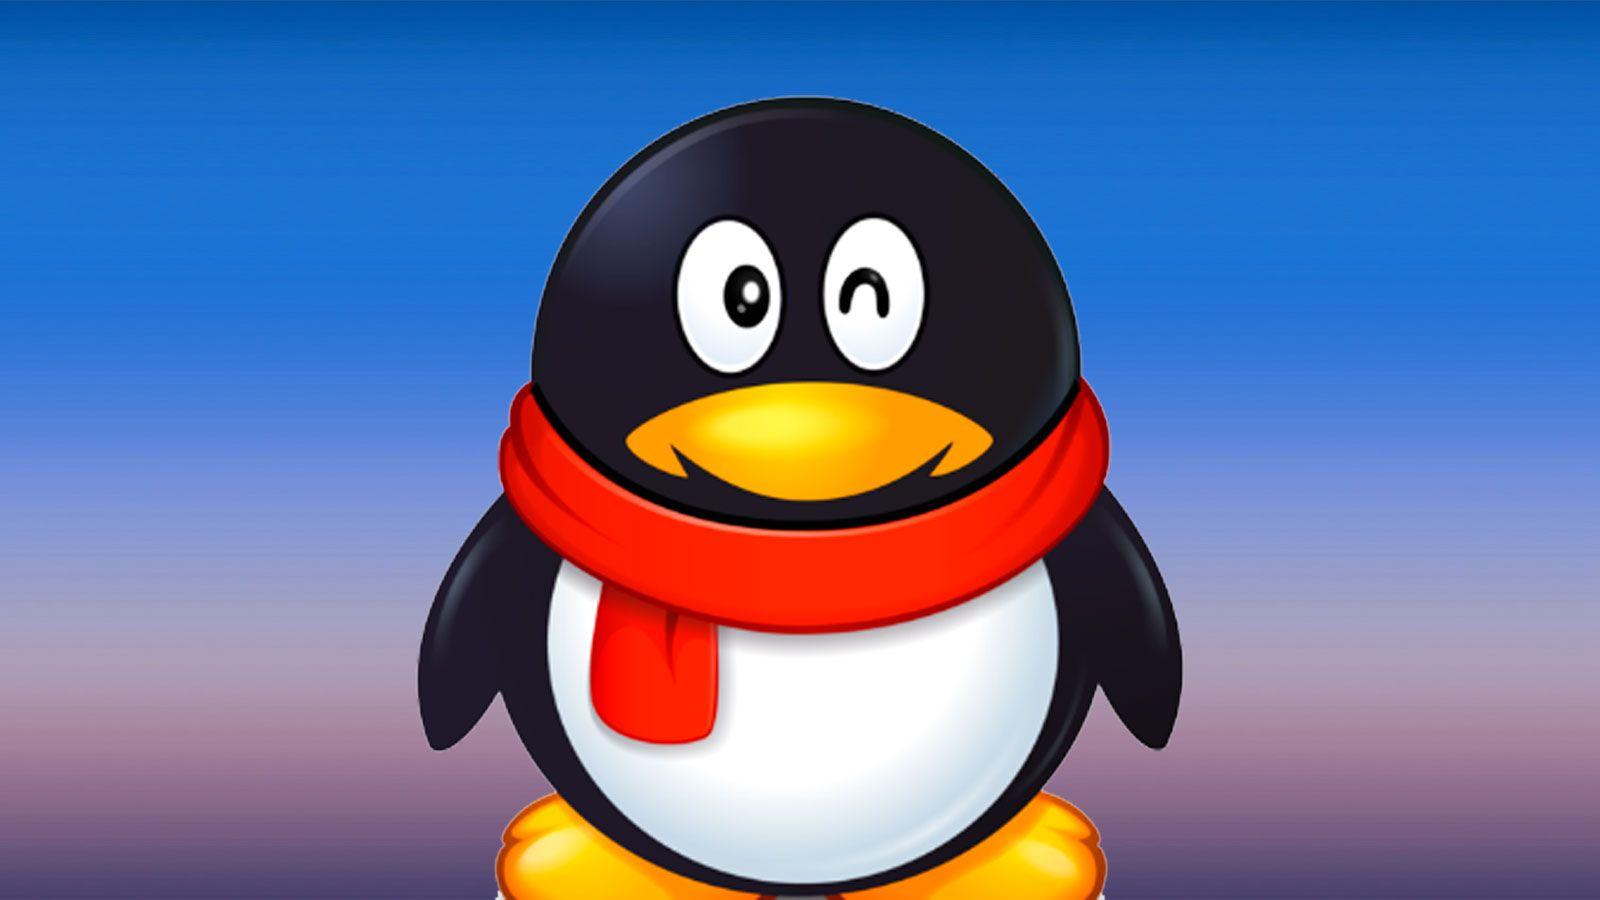 QQ Messenger Logo - Meet Tencent's QQ Penguin > 360. Article / Advertising Week